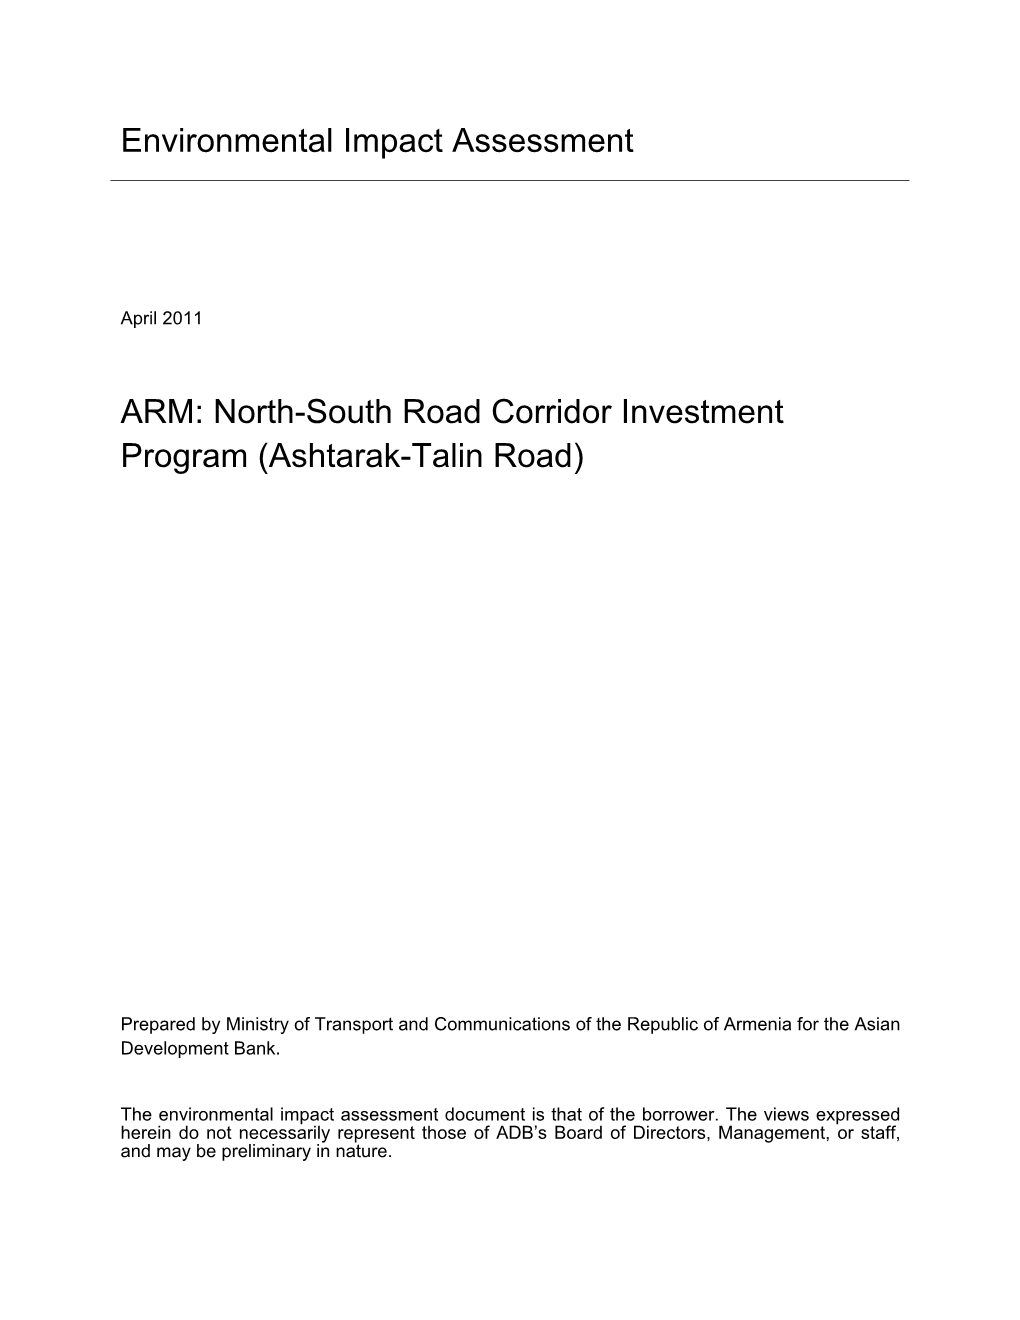 EIA: Armenia: North-South Road Corridor Investment Program